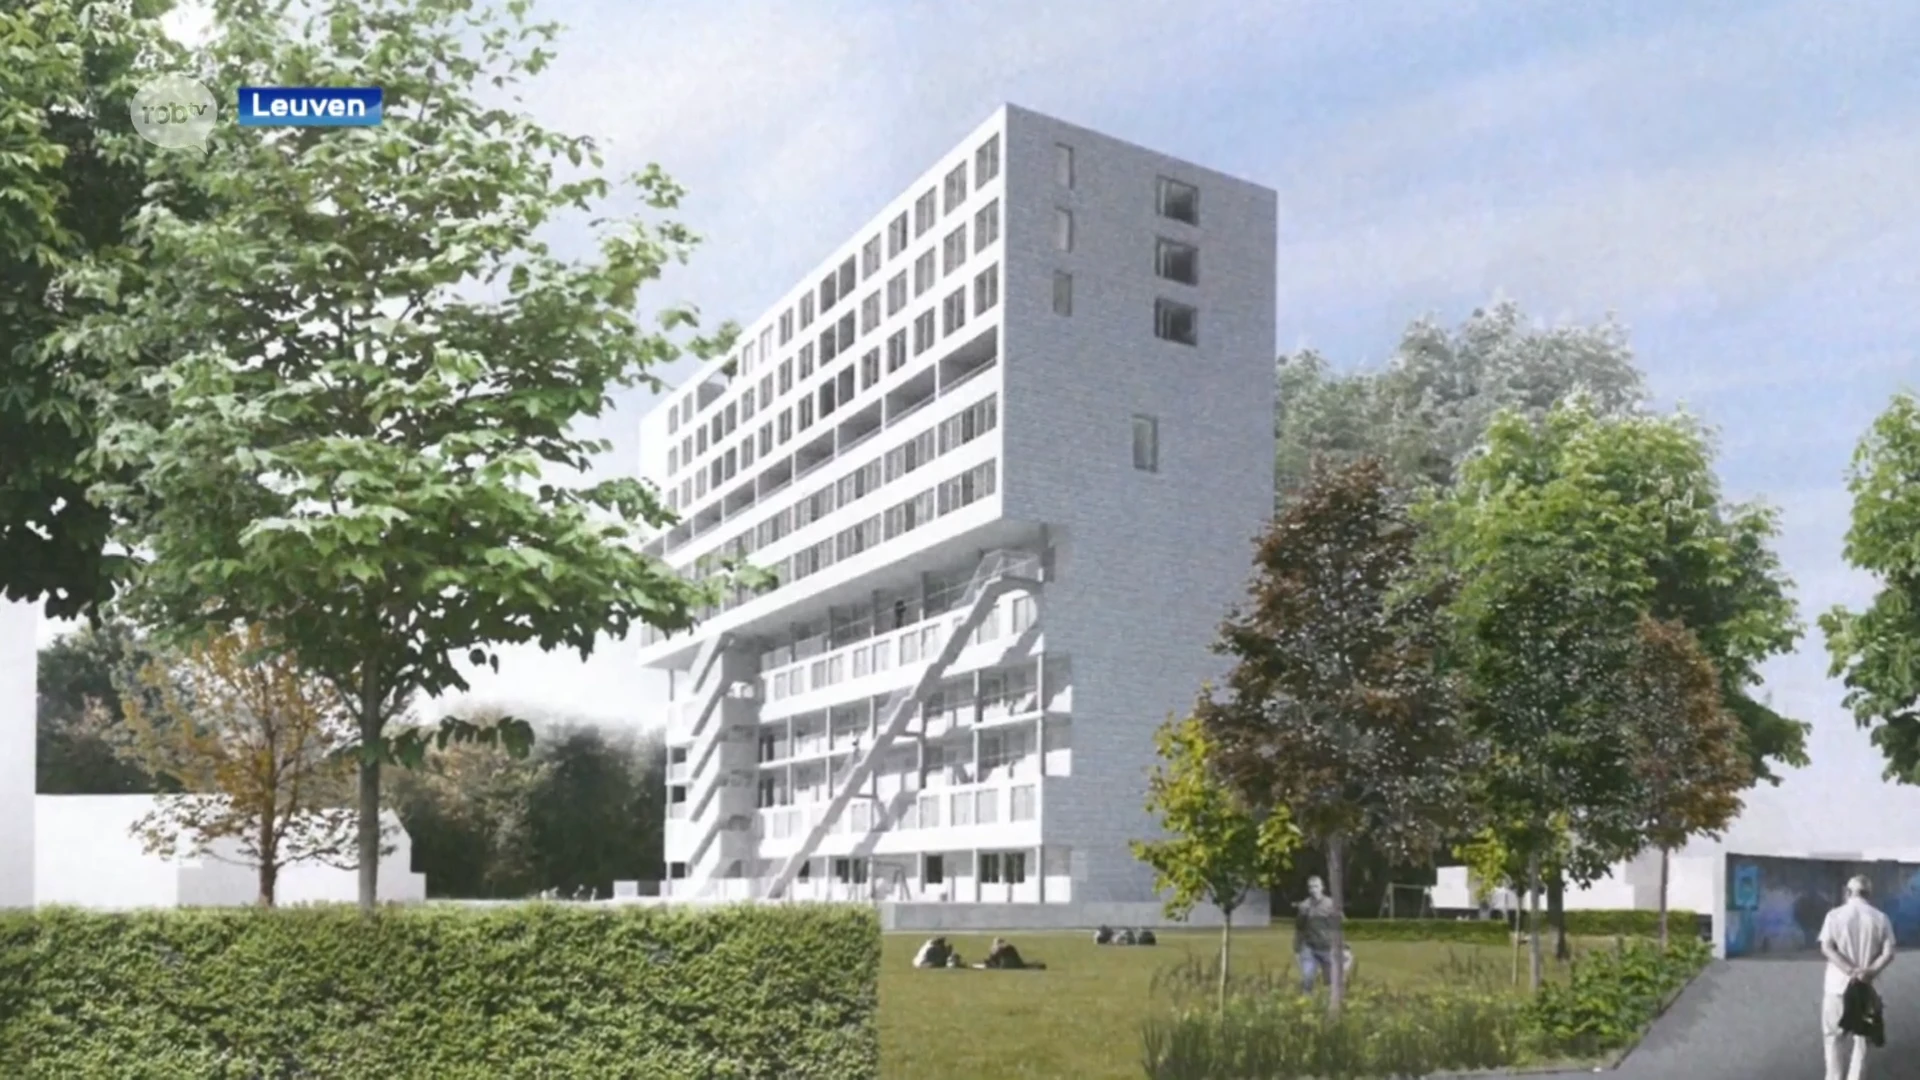 Dijledal wil nieuwe sociale appartementen bouwen aan Koning Albertplein in Kessel-Lo